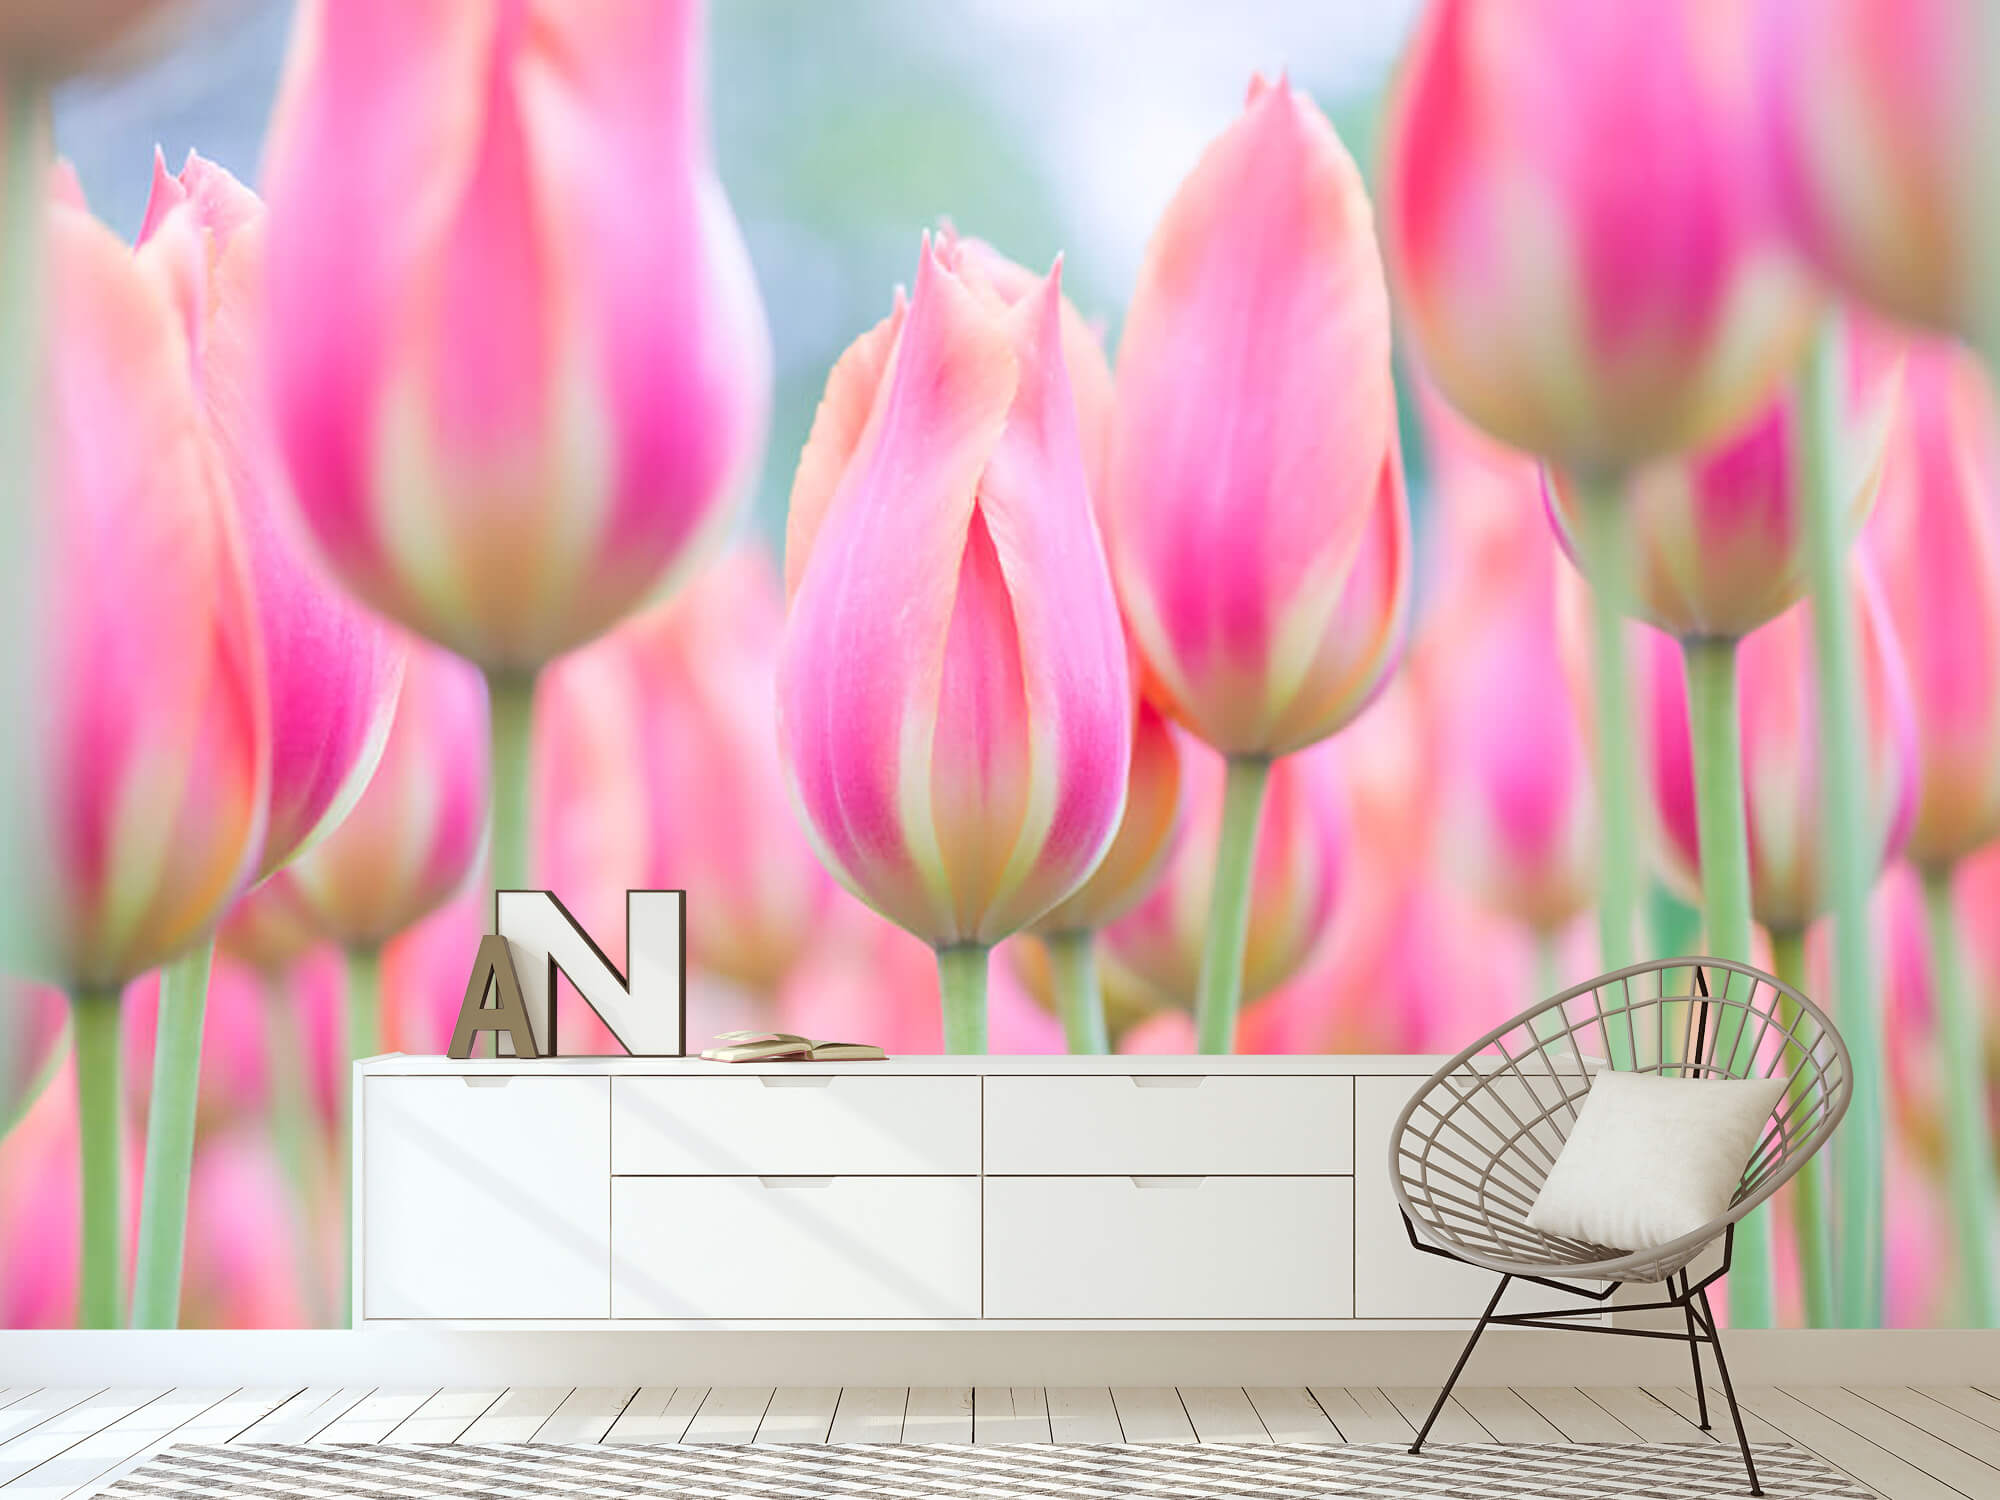  Close-up pink tulips 17